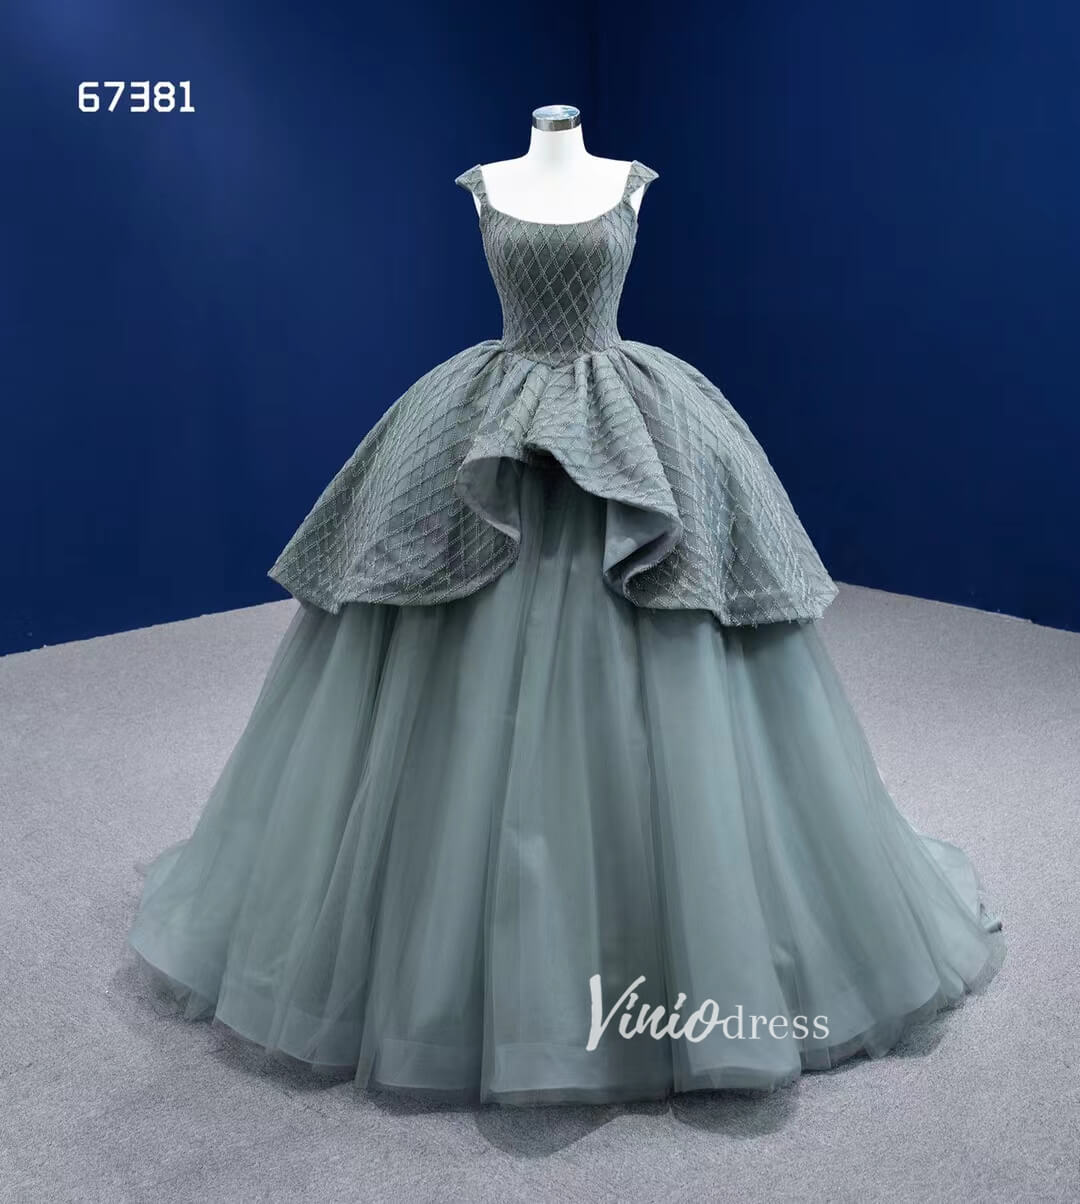 Scoop Neck Ball Gown Wedding Dress Vintage Quinceanera Dresses 67381-Quinceanera Dresses-Viniodress-Viniodress